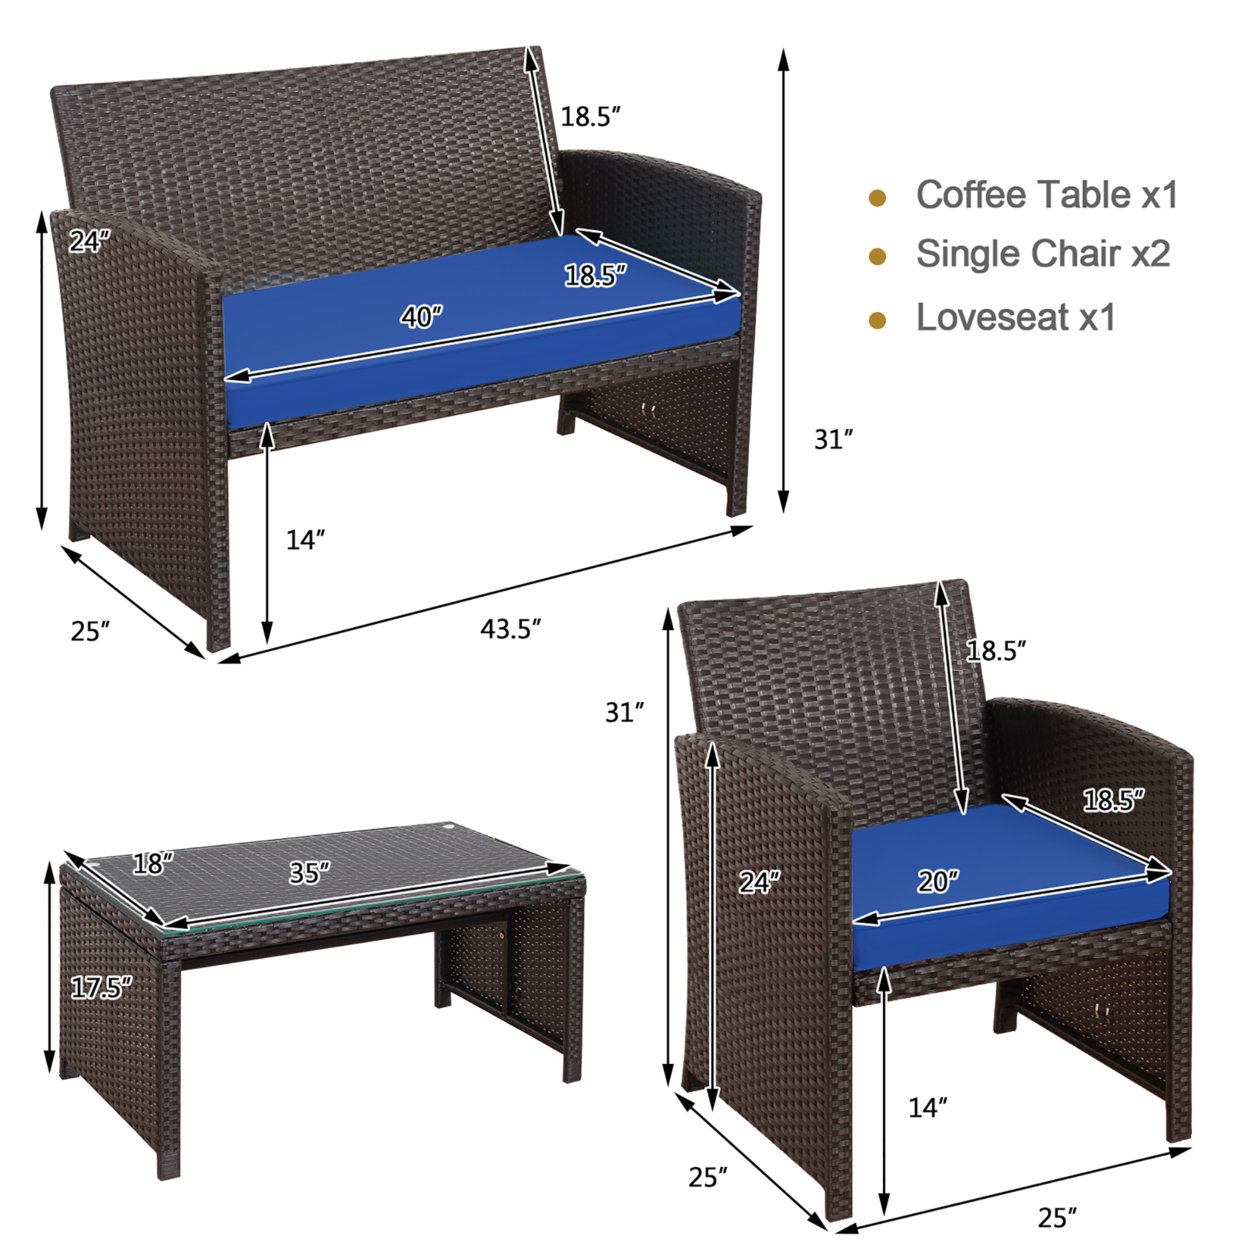 4PCS Patio Conversation Set Outdoor Rattan Furniture Set W/ Navy Cushions